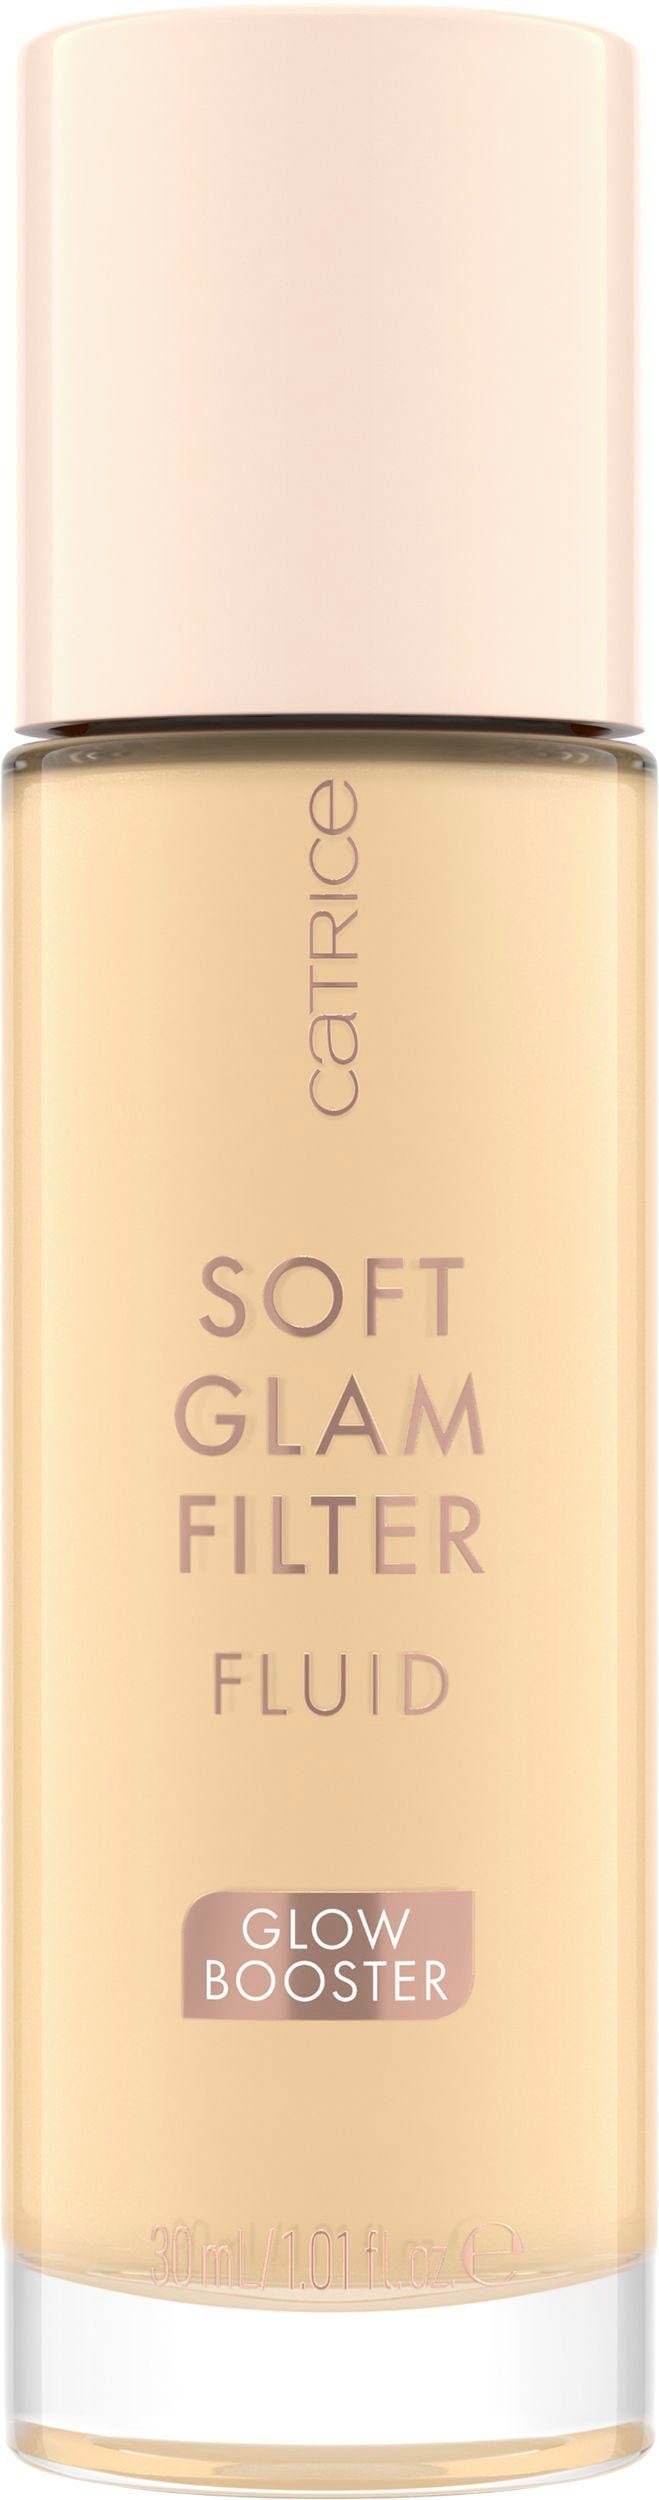 Filter Primer Fluid Glam Catrice Soft